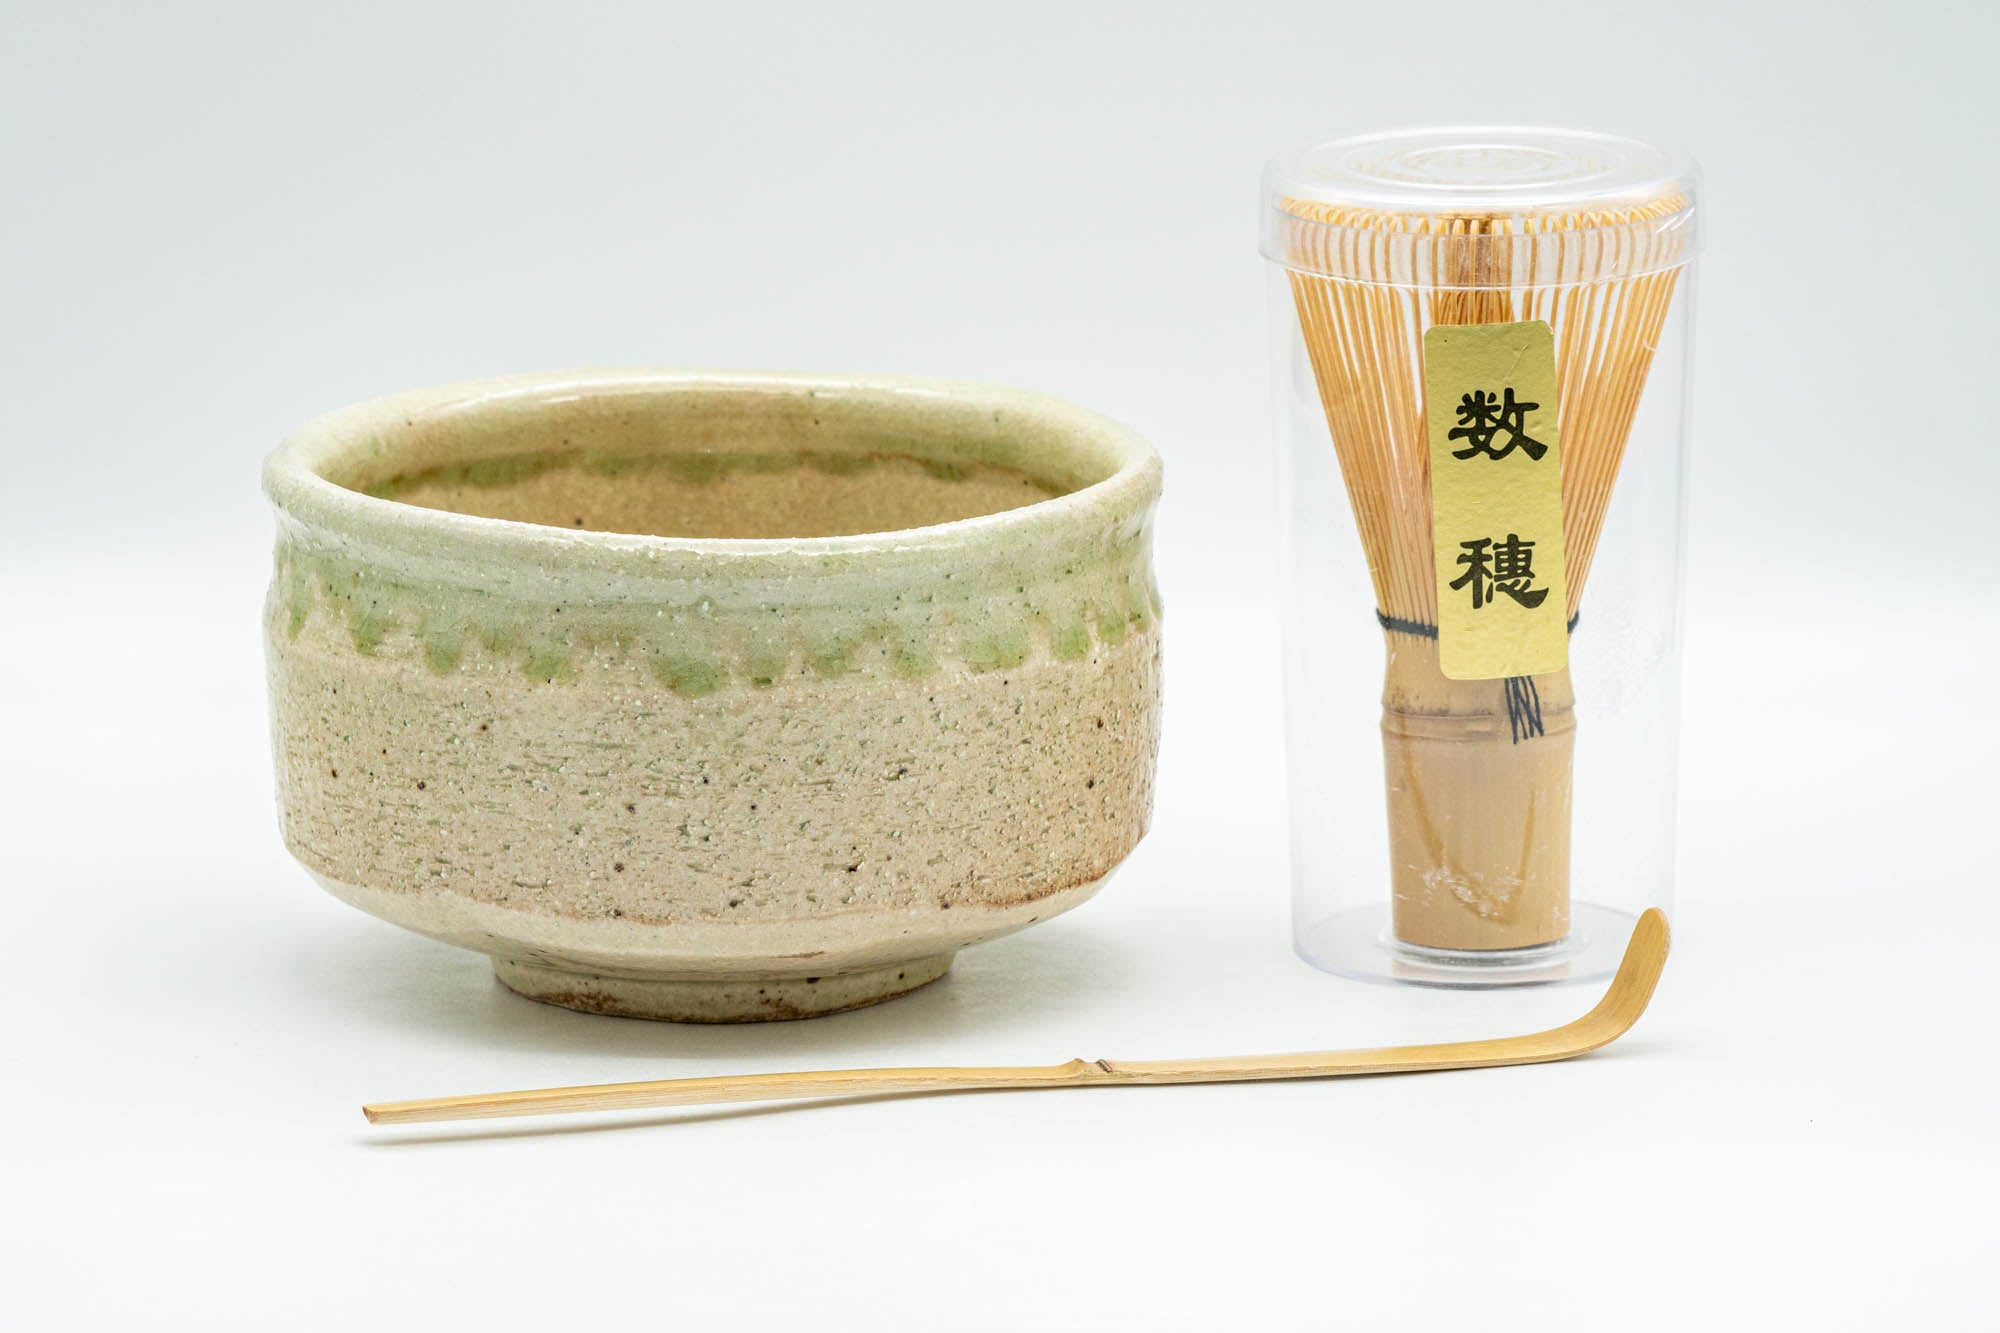 Japanese Matcha Bowl Set - Drip Glazed Chadamari Hantsutsu-gata Chawan with Bamboo Chasen Whisk and Chashaku Scoop- 450ml